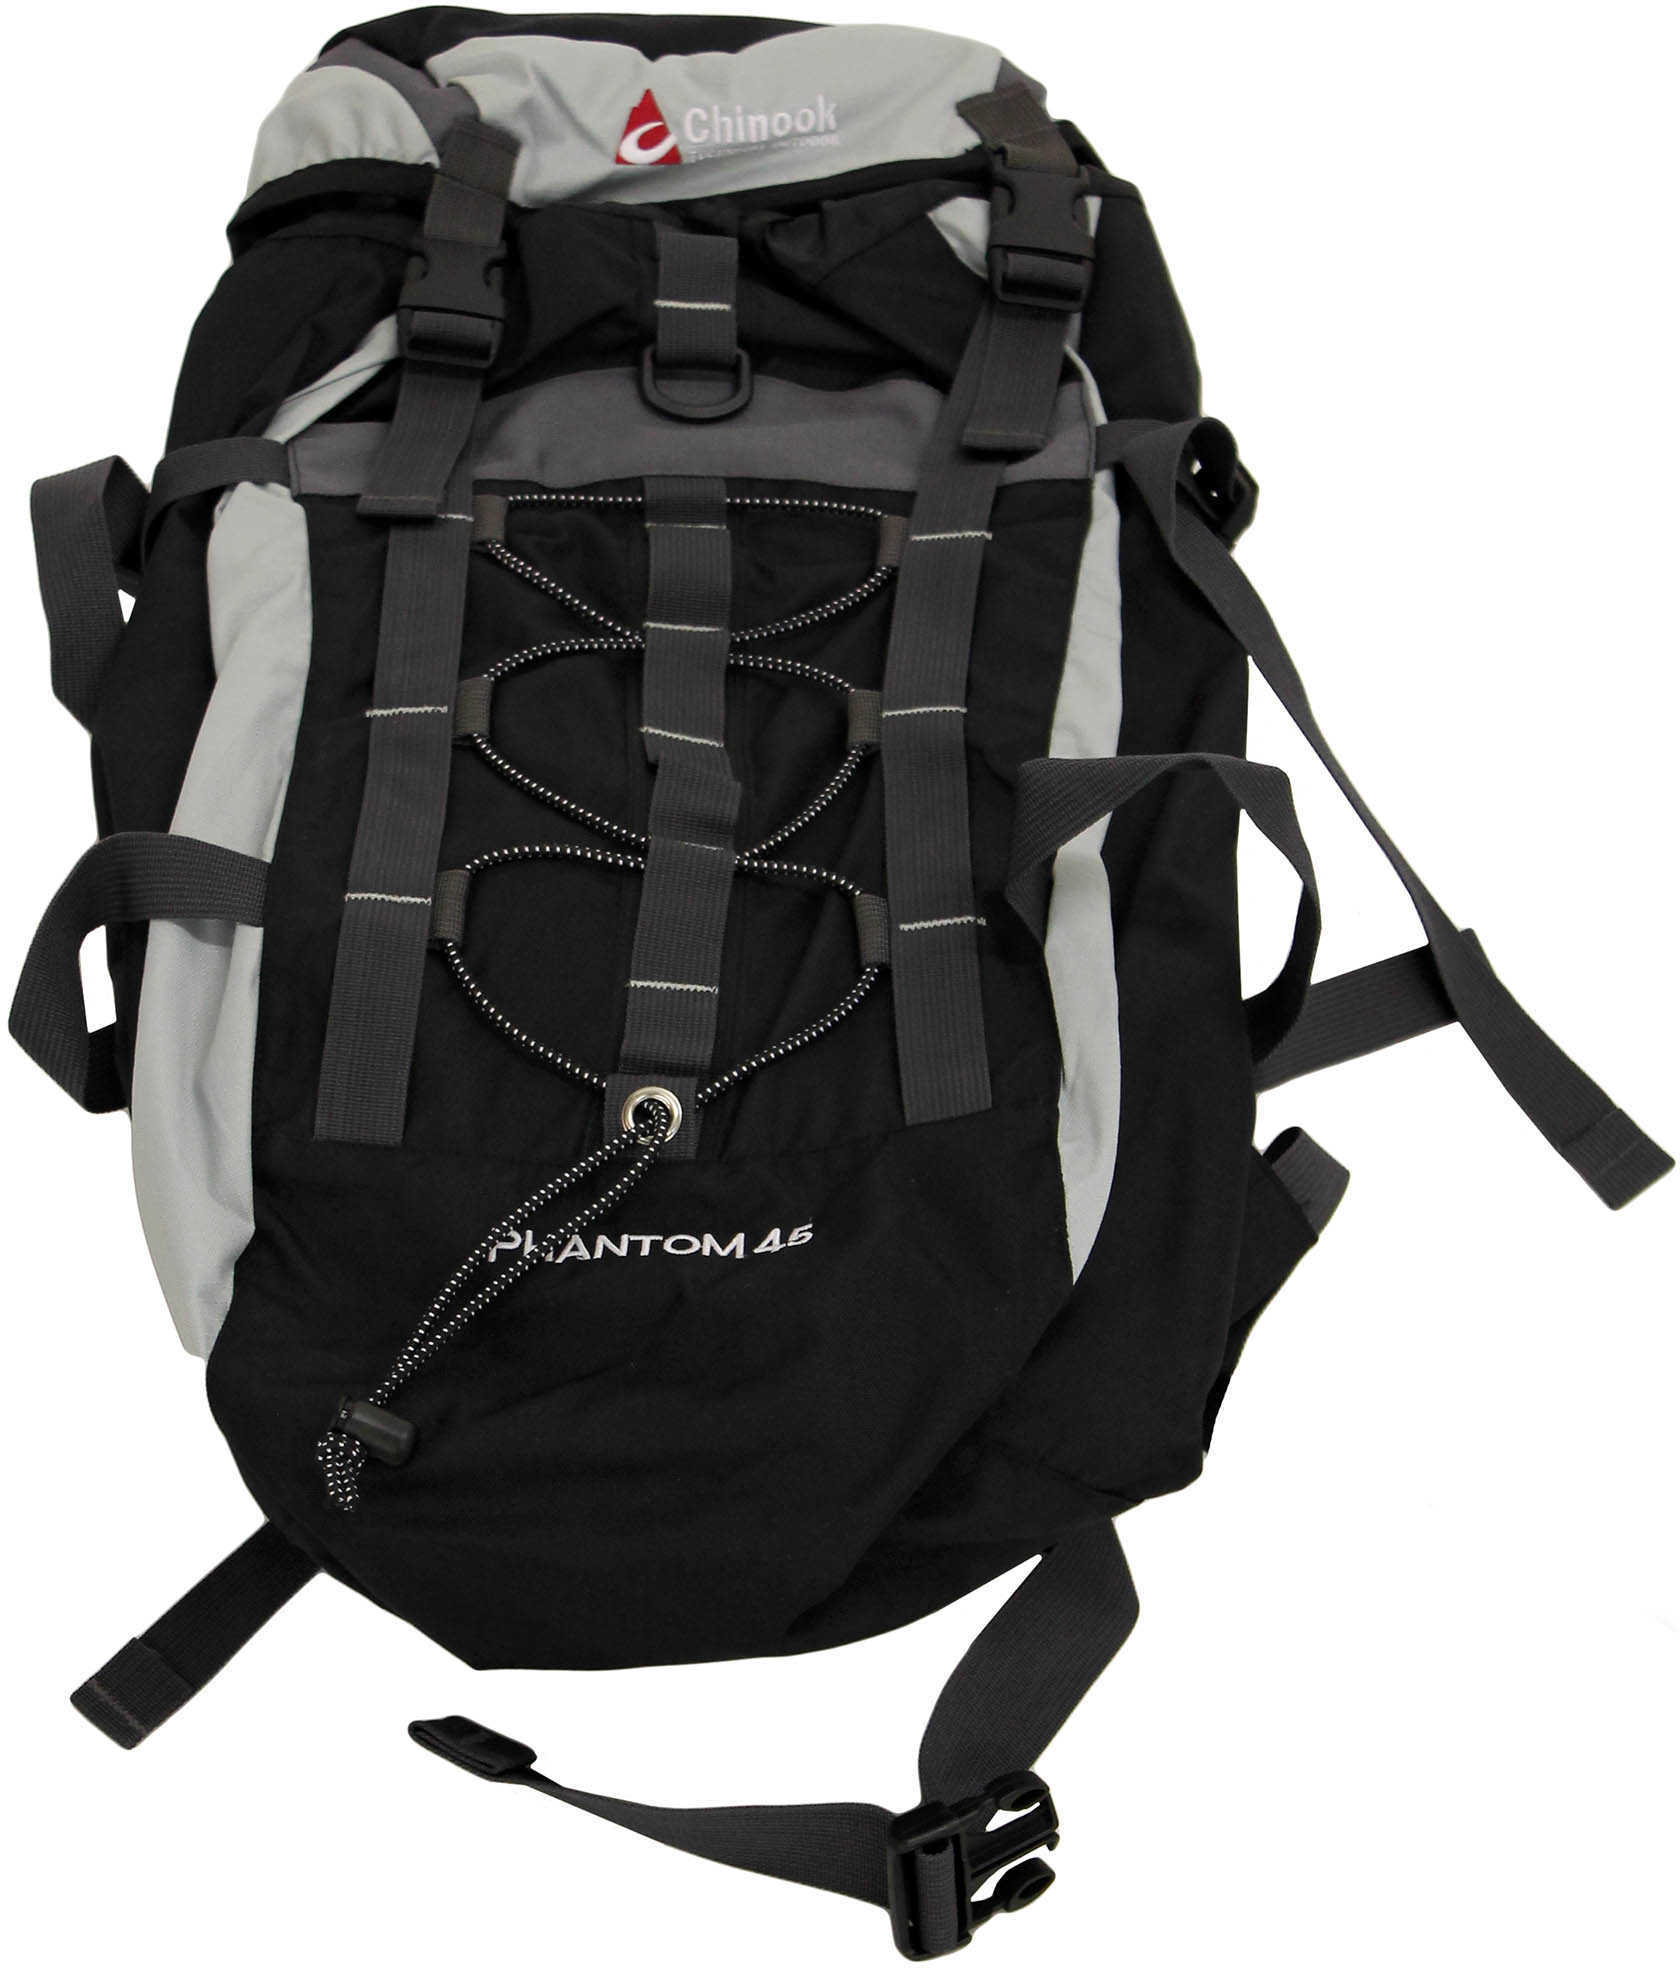 Chinook Phantom 45 Backpack (Color: Black)